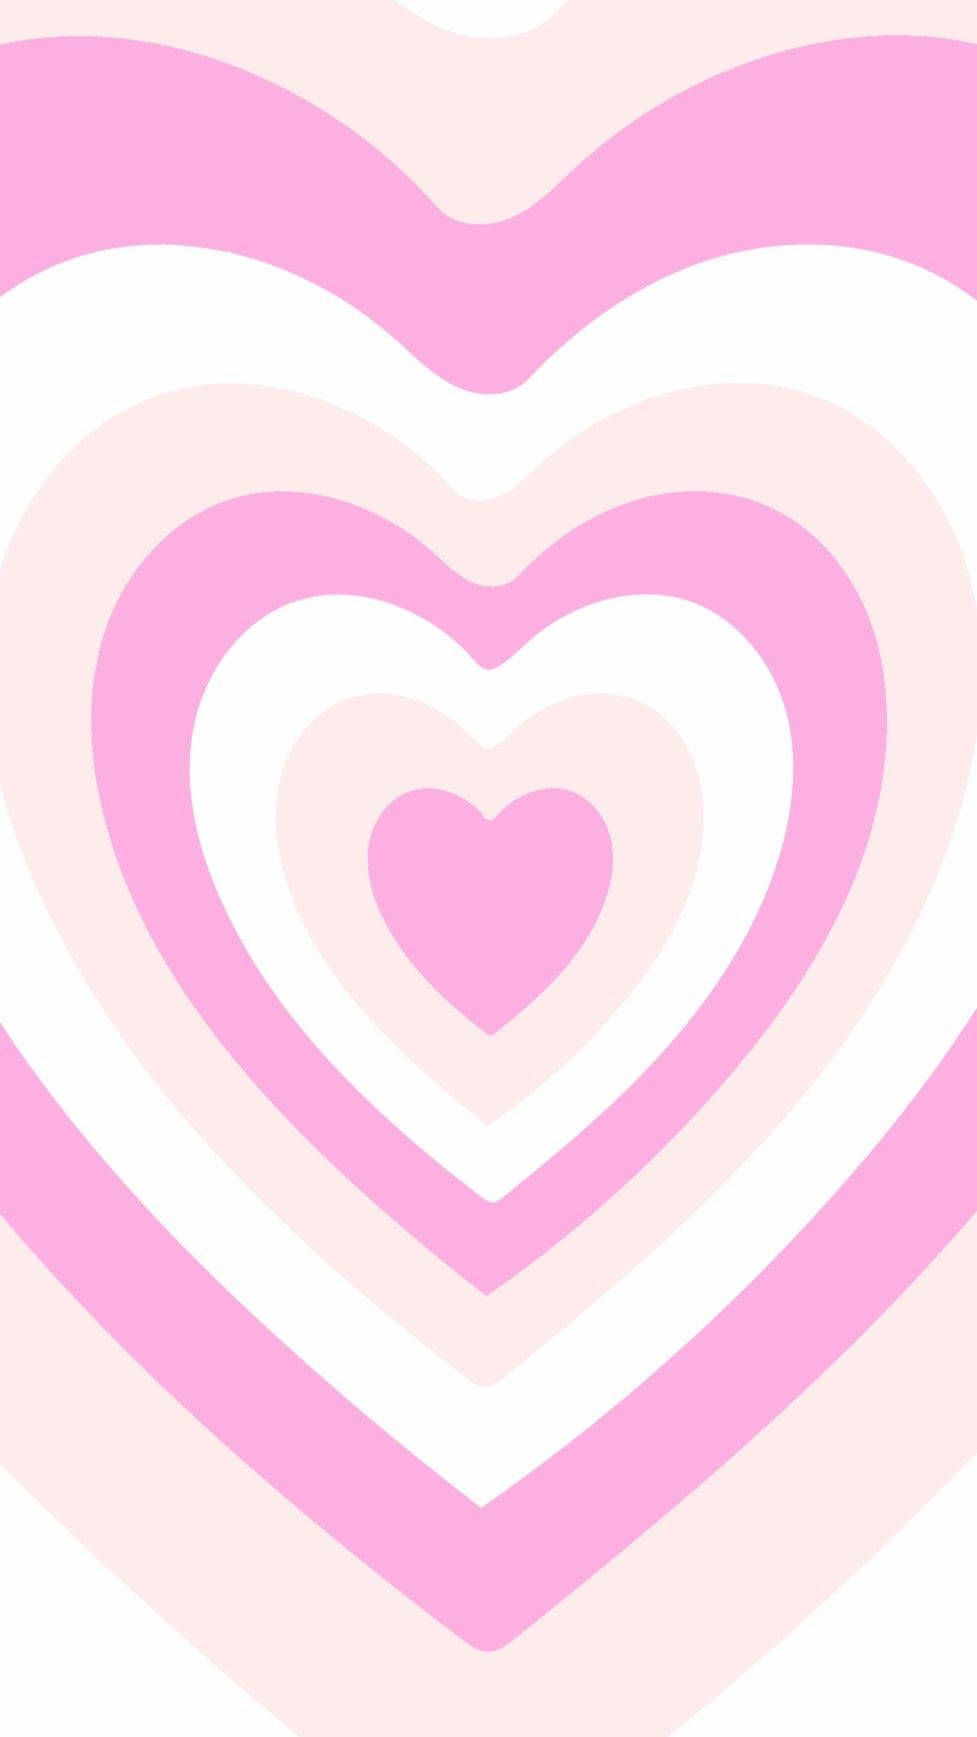  Magenta Hintergrundbild 977x1737. Download Light Magenta And Pastel Pink Heart Wallpaper